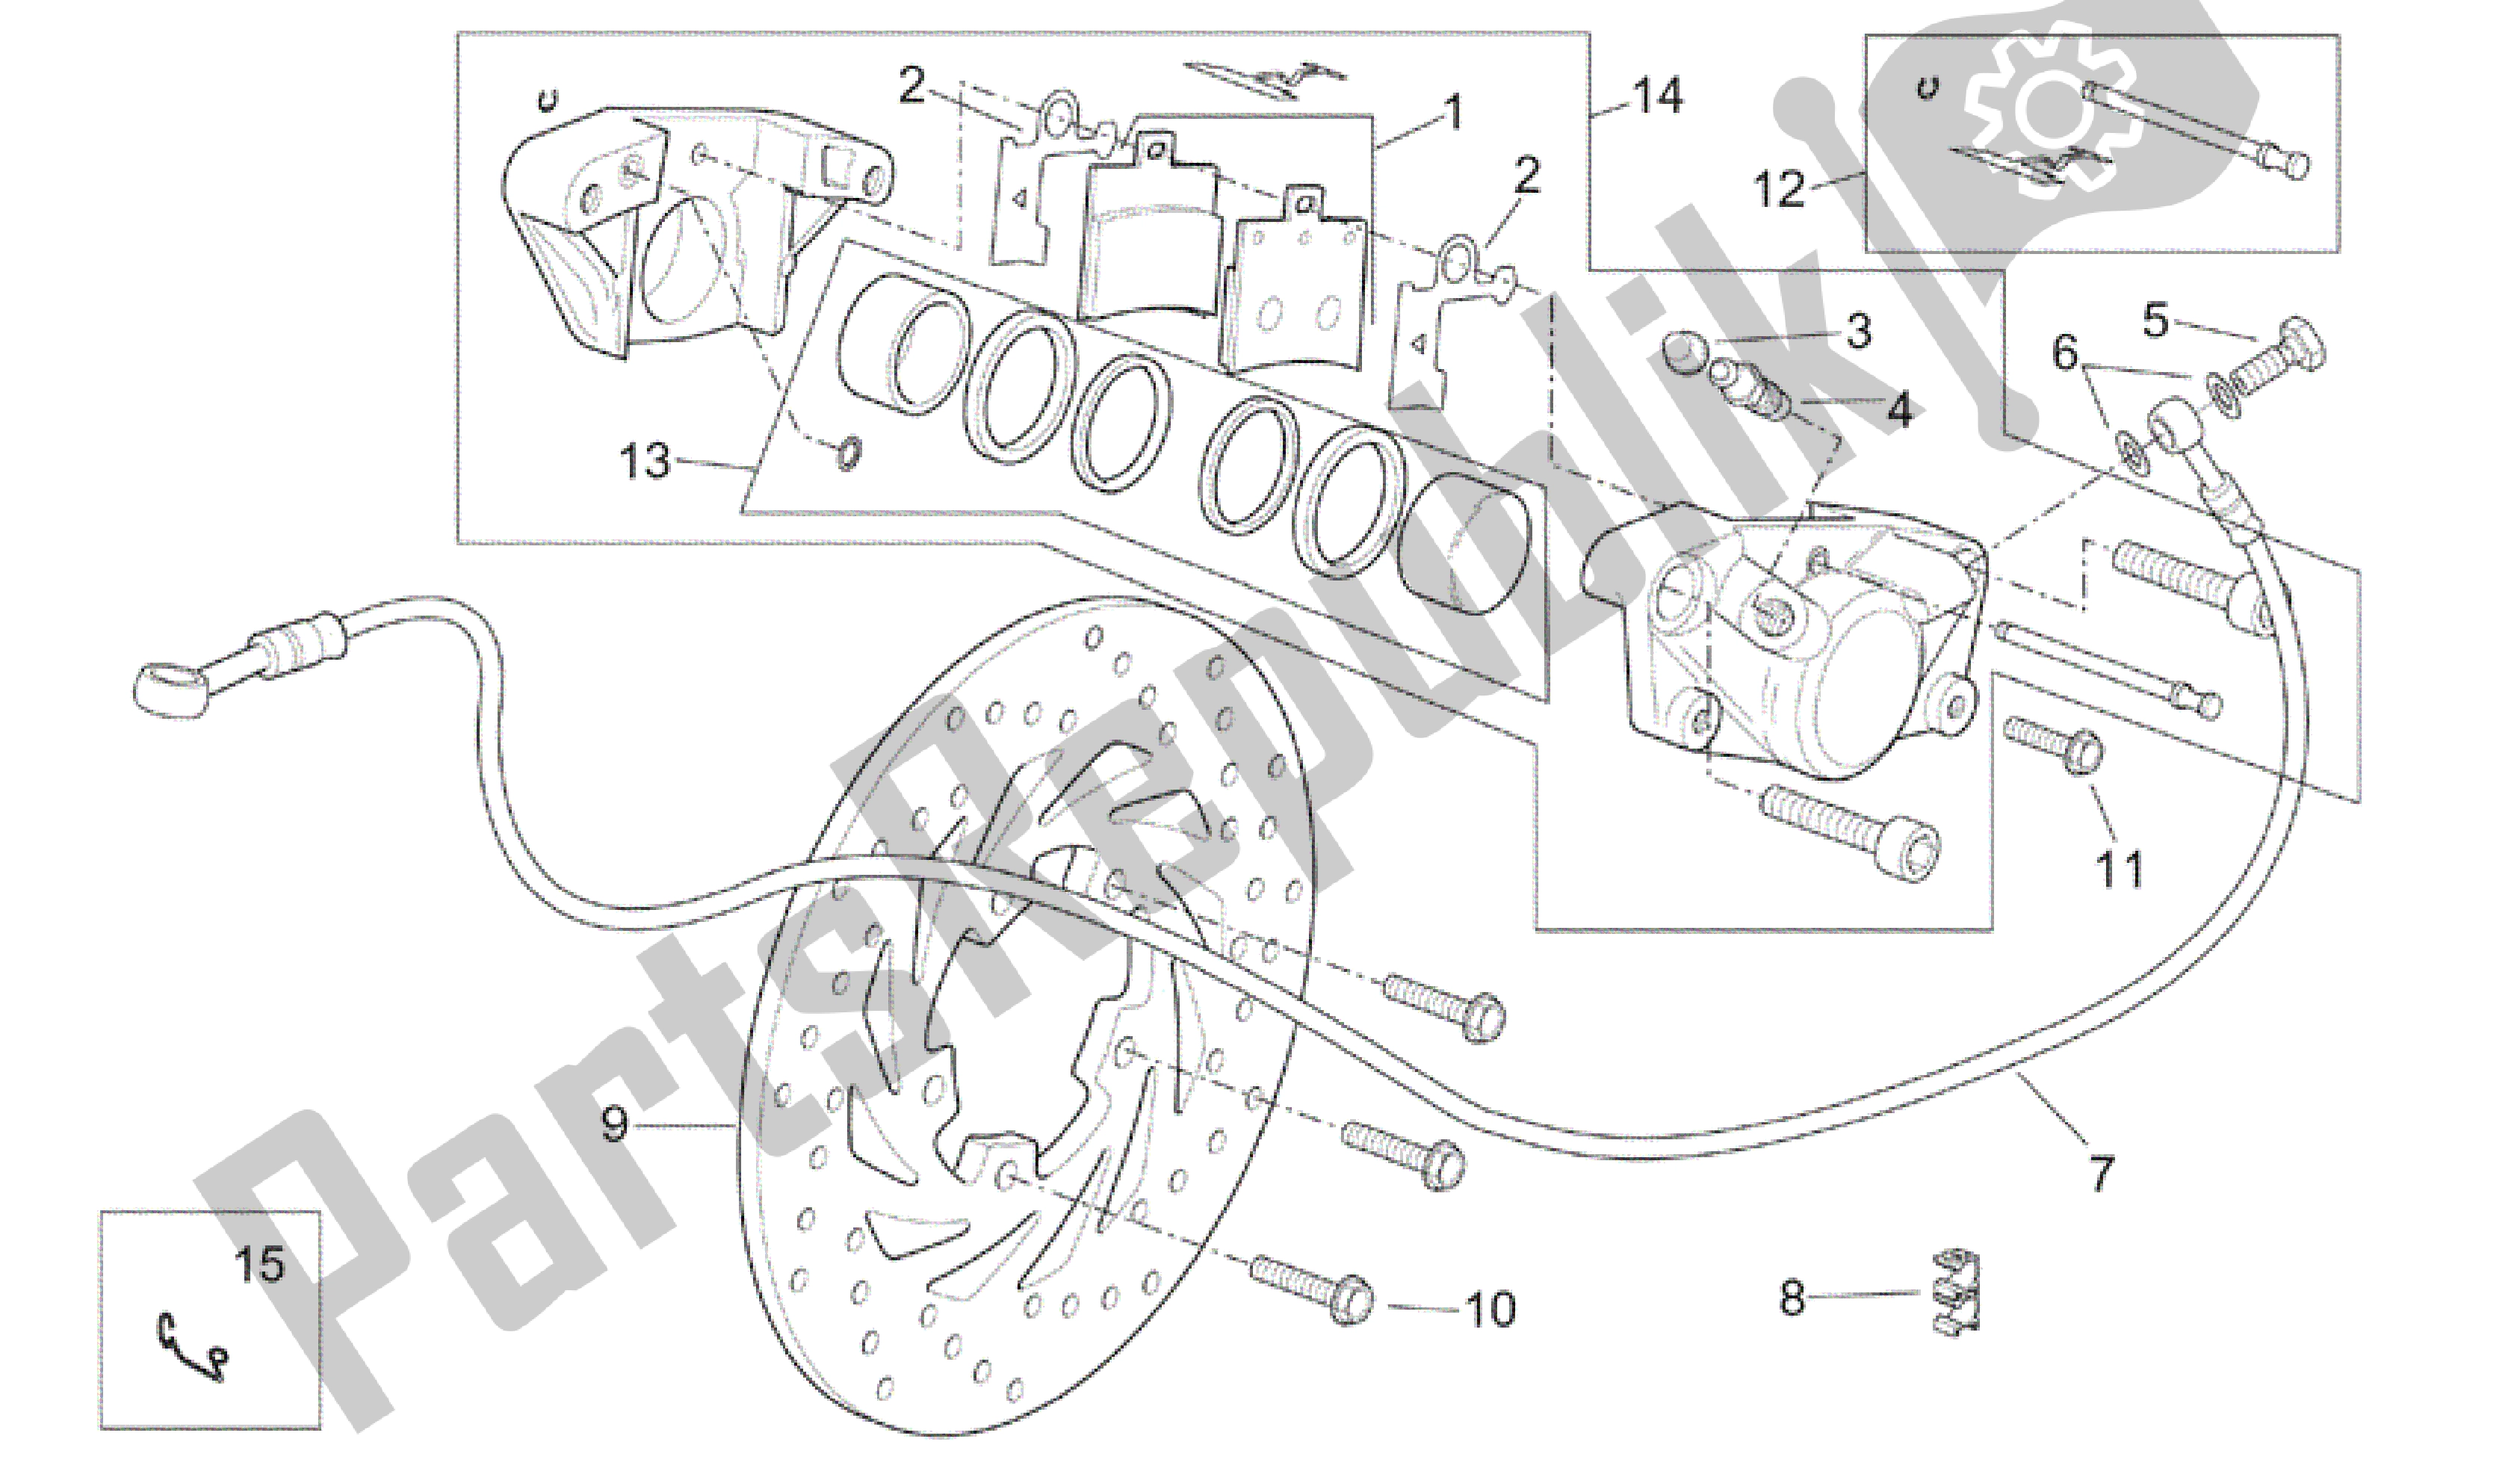 All parts for the Rear Caliper of the Aprilia Scarabeo 125 1999 - 2004